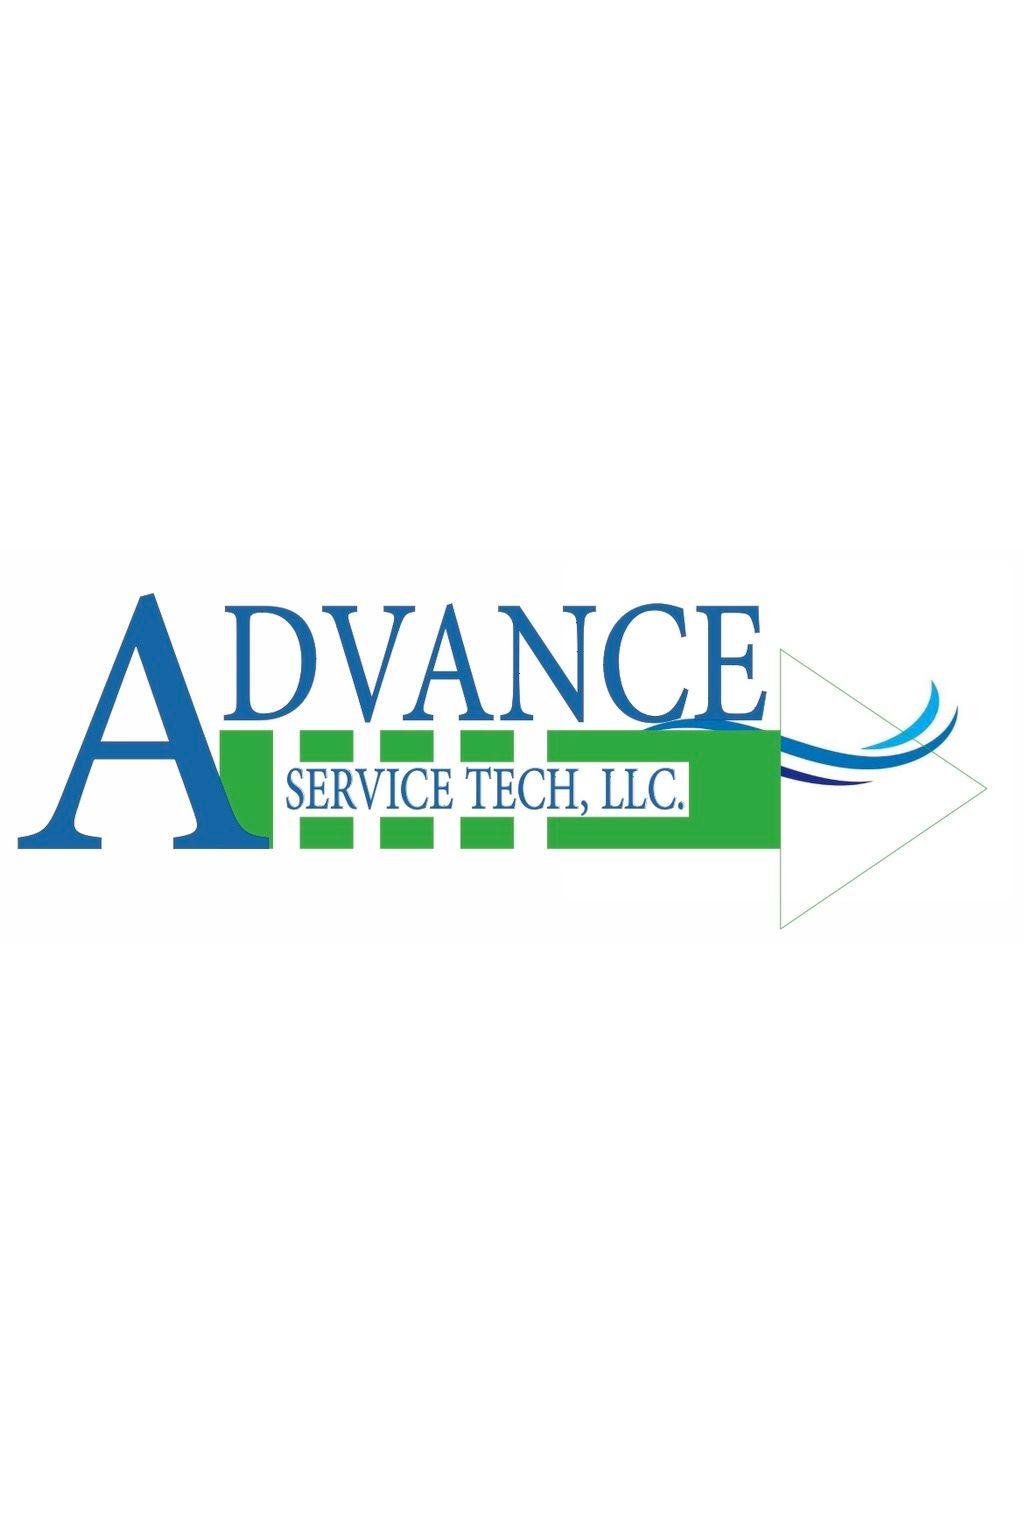 ADVANCE SERVICE TECH, LLC